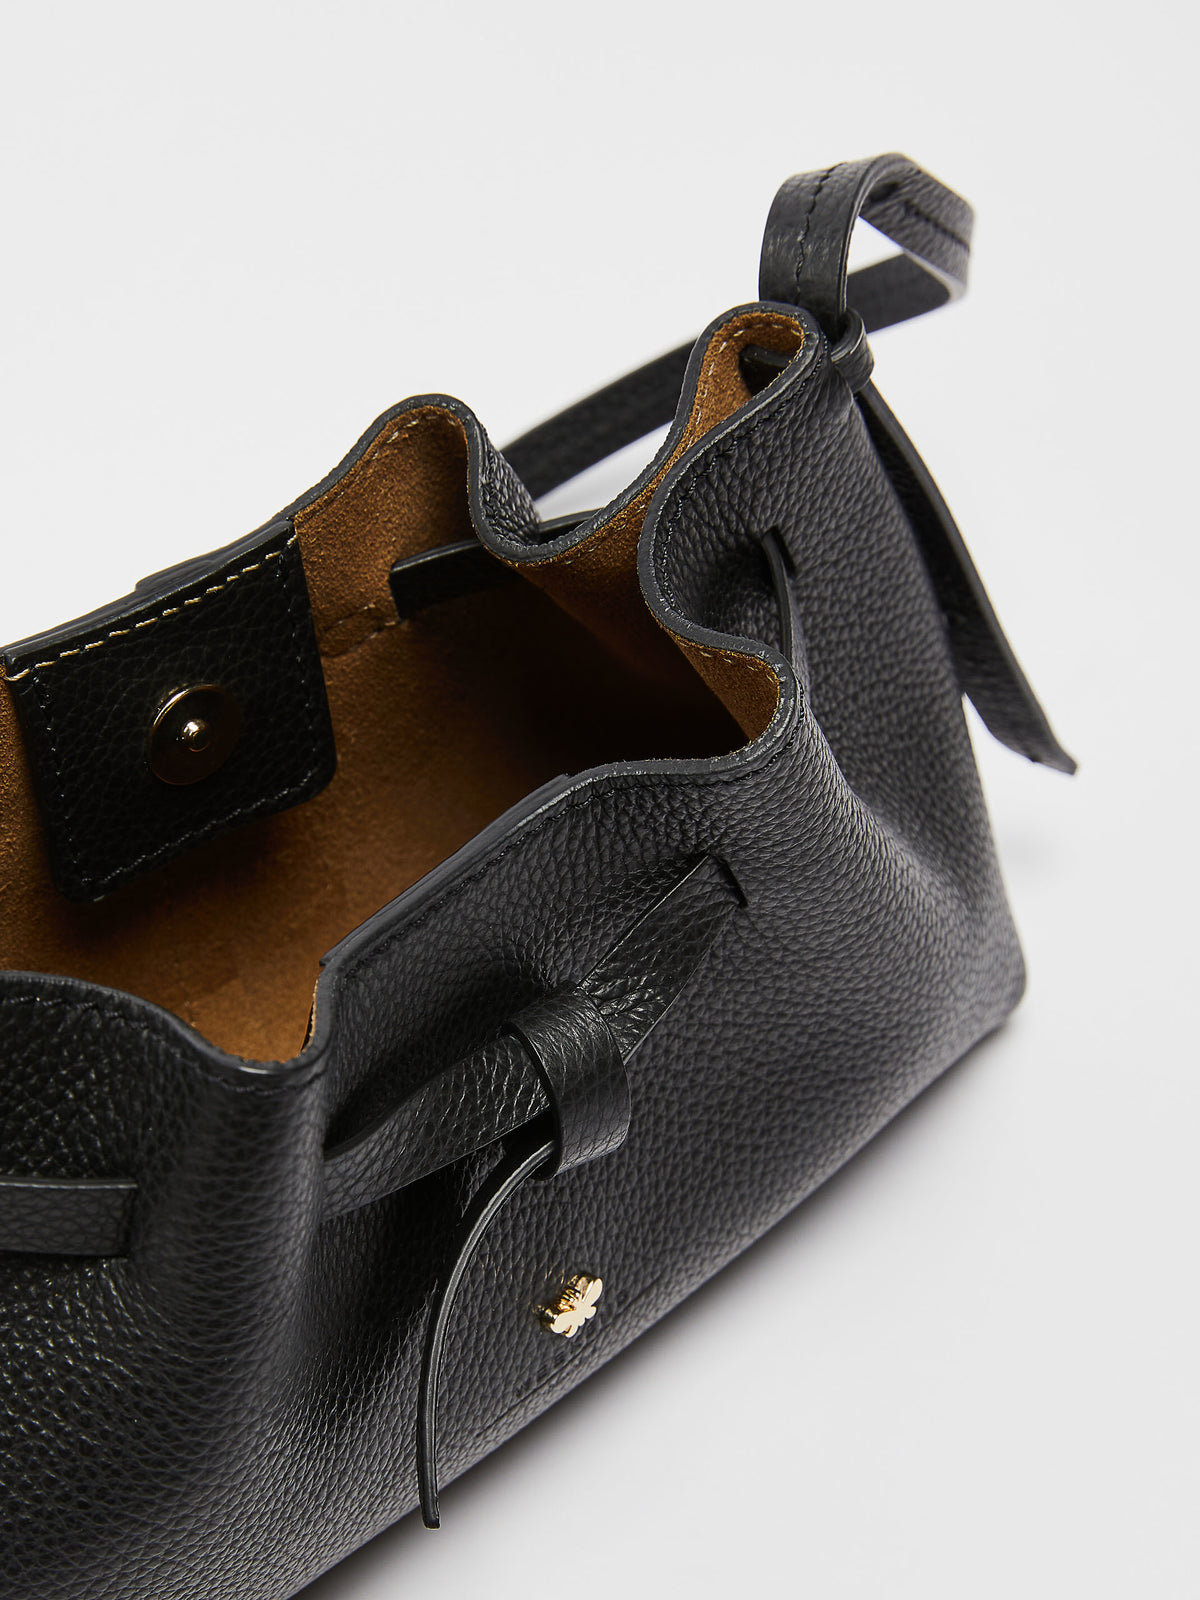 Giovane Leather Bag